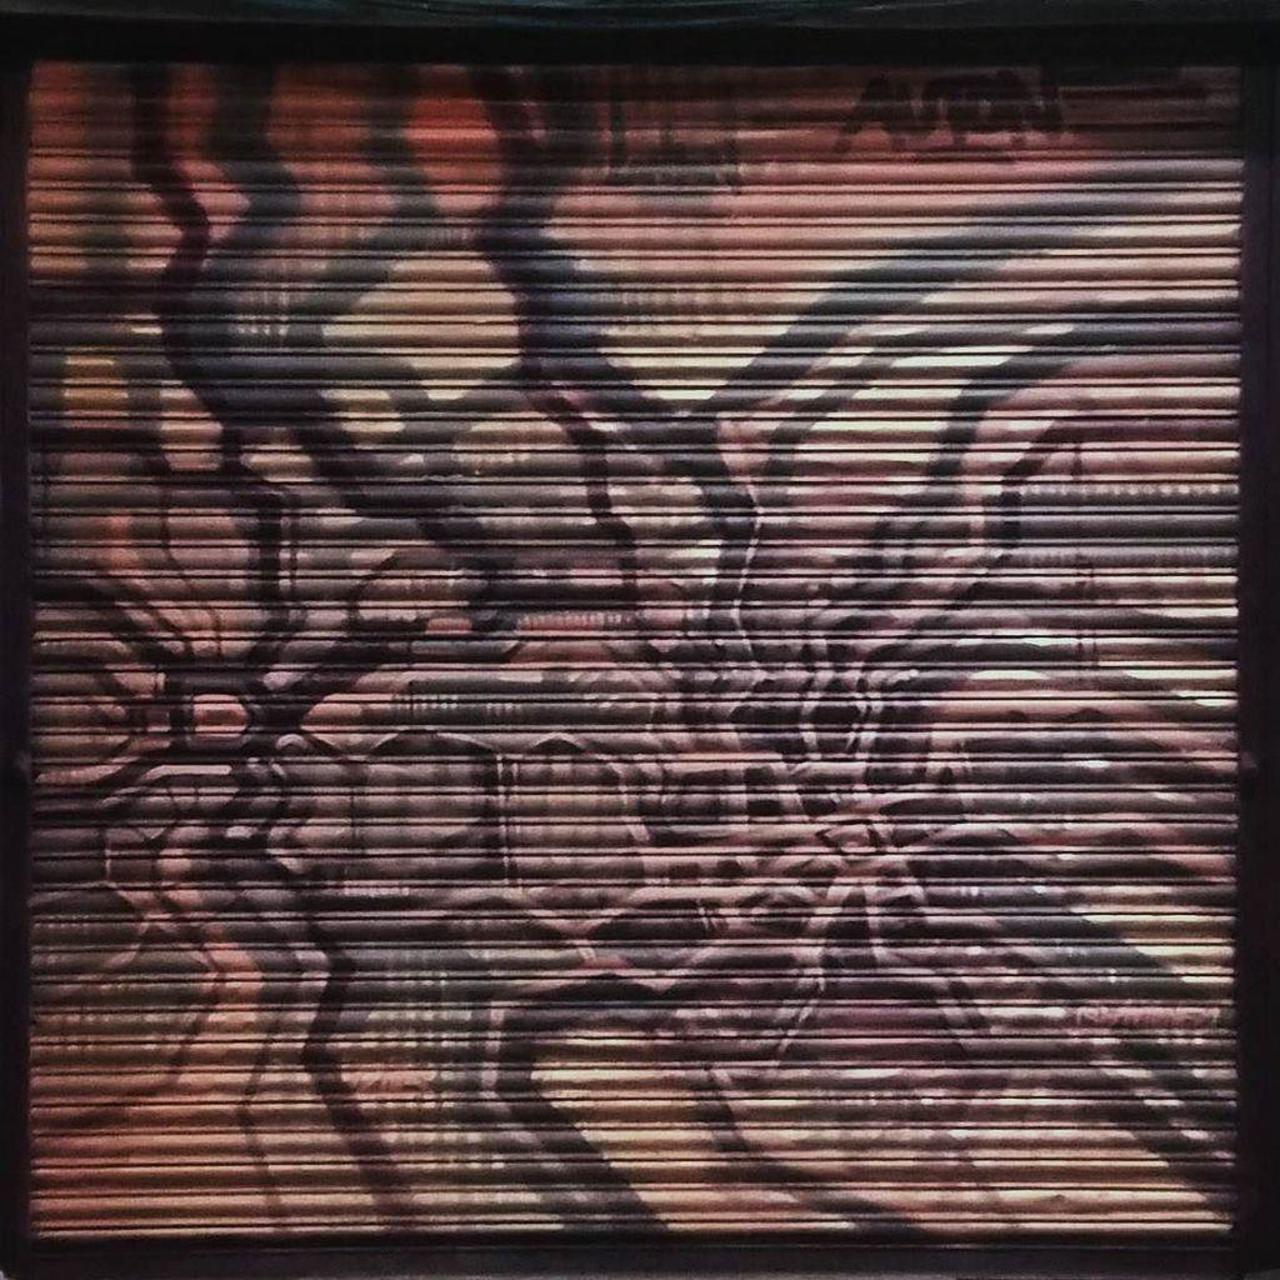 My new #painting in #LeakeStreetTunnel #London Same #shutter for the third time ;) #copper #streetart #graffiti #po… http://t.co/tGRhVdYVbL